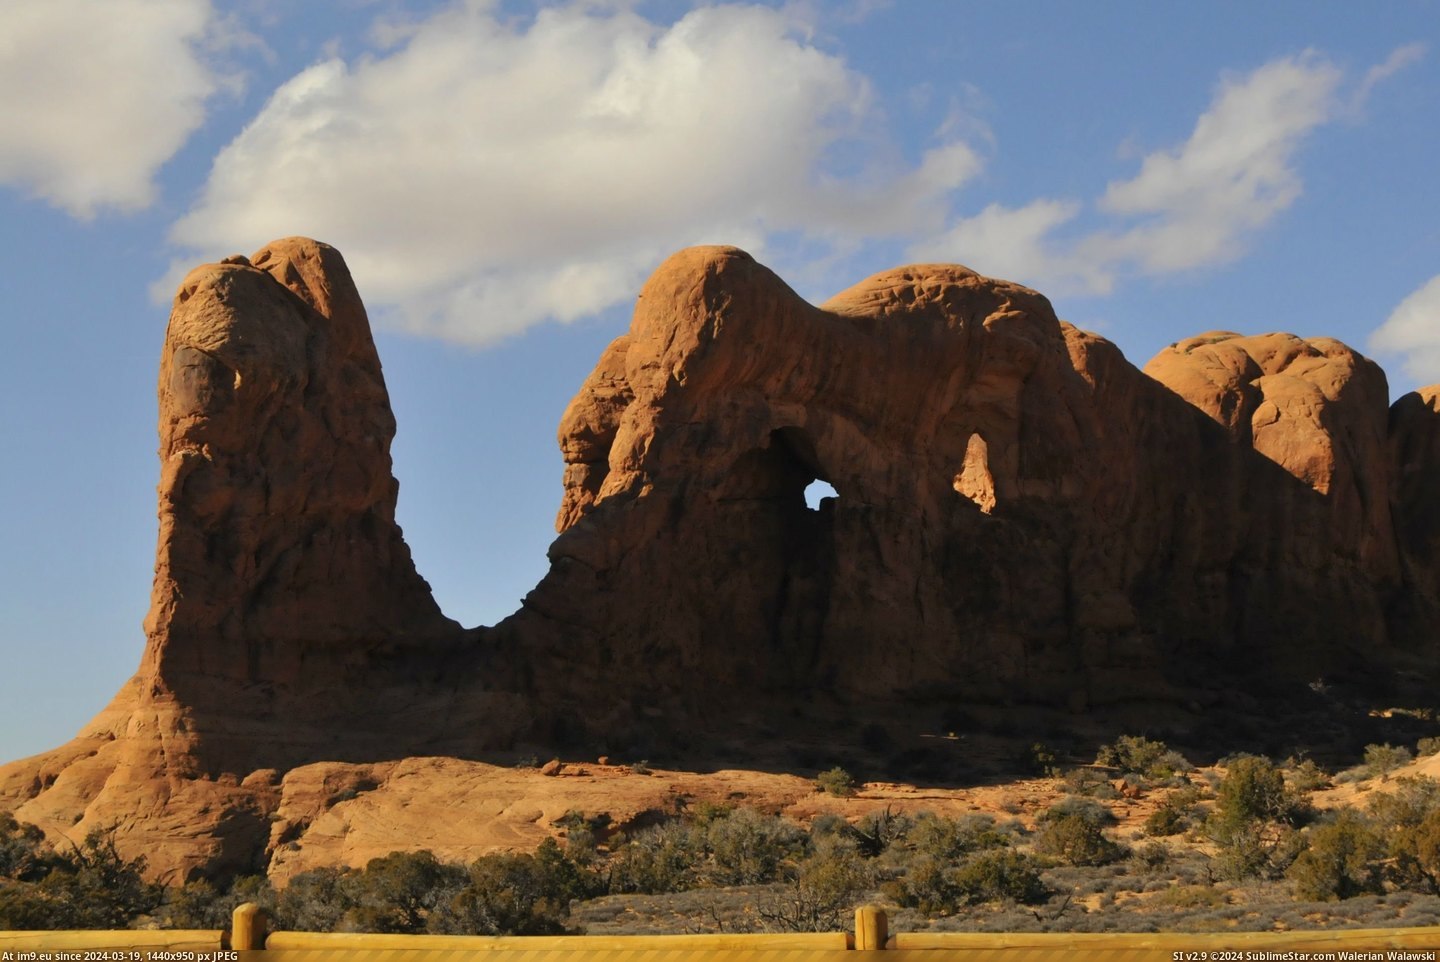 #Shot #Saw #Elephant #Moab #Rock #Utah [Earthporn] Elephant Rock i saw and shot in Moab, Utah. [2894x1922] Pic. (Bild von album My r/EARTHPORN favs))